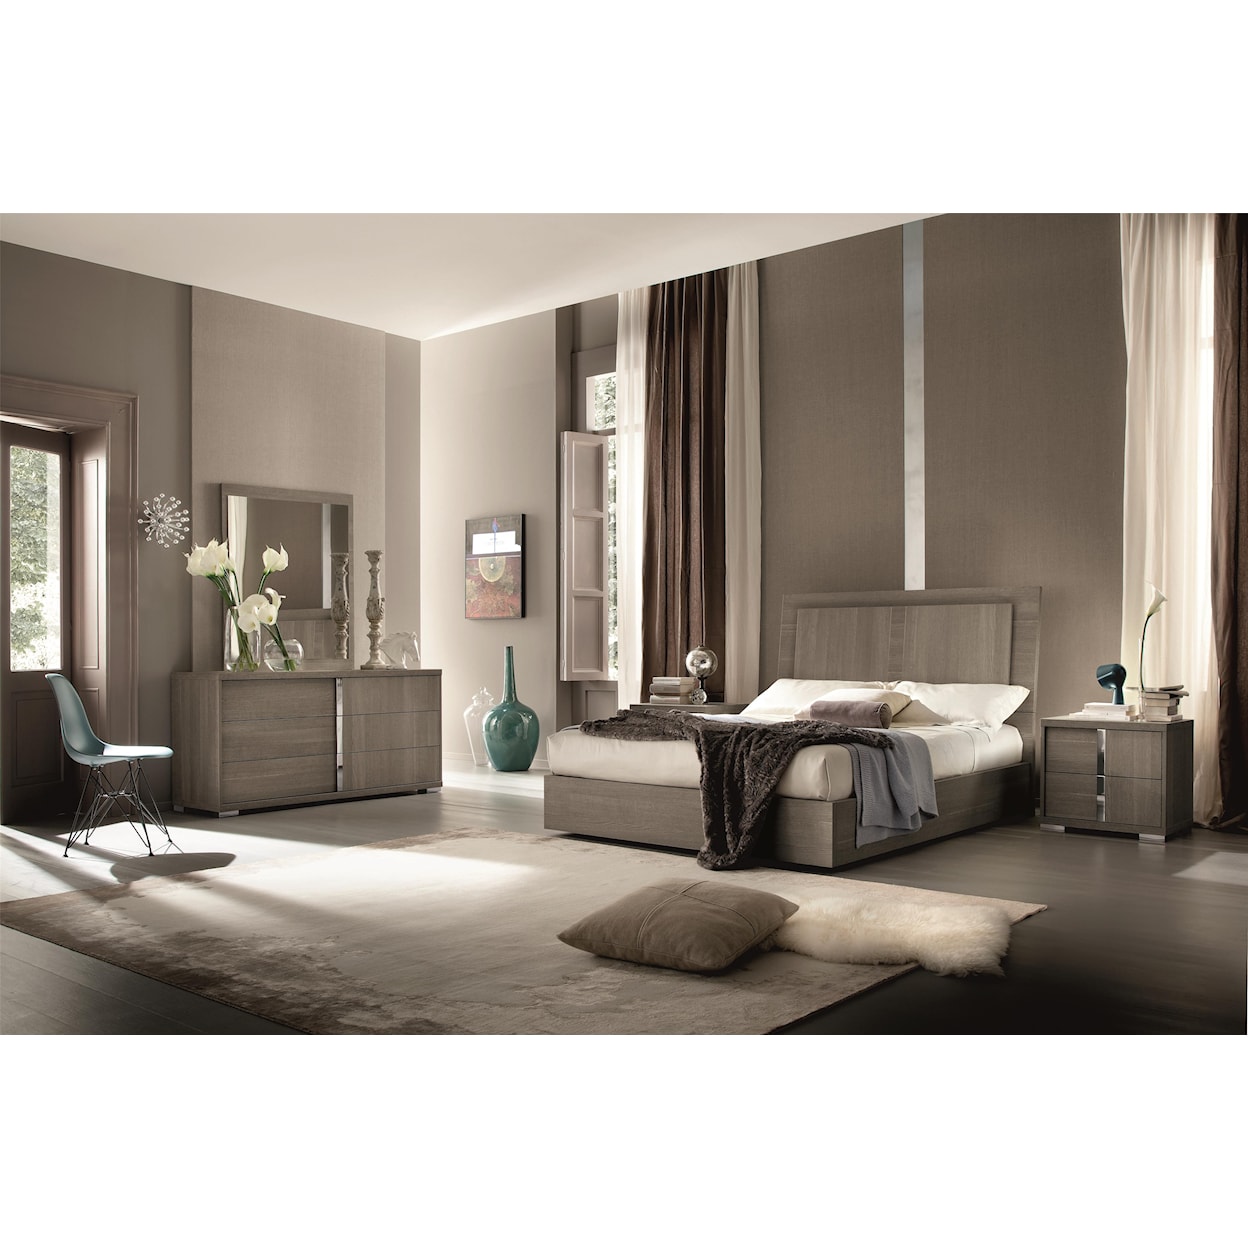 Alf Italia Tivoli Queen Bedroom Group